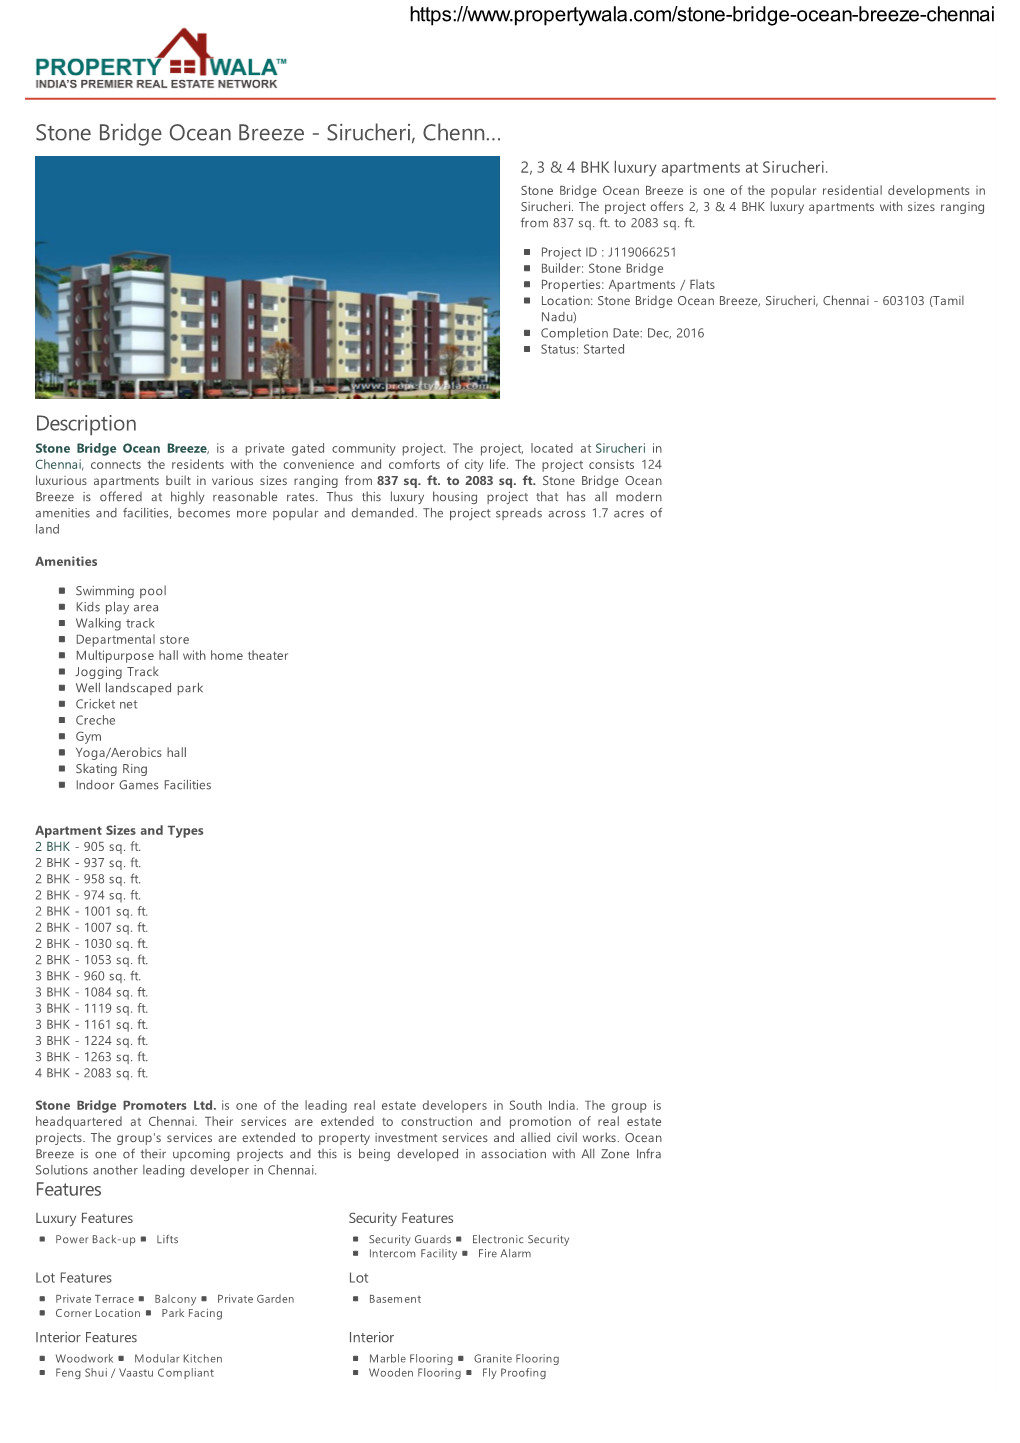 Stone Bridge Ocean Breeze - Sirucheri, Chenn… 2, 3 & 4 BHK Luxury Apartments at Sirucheri